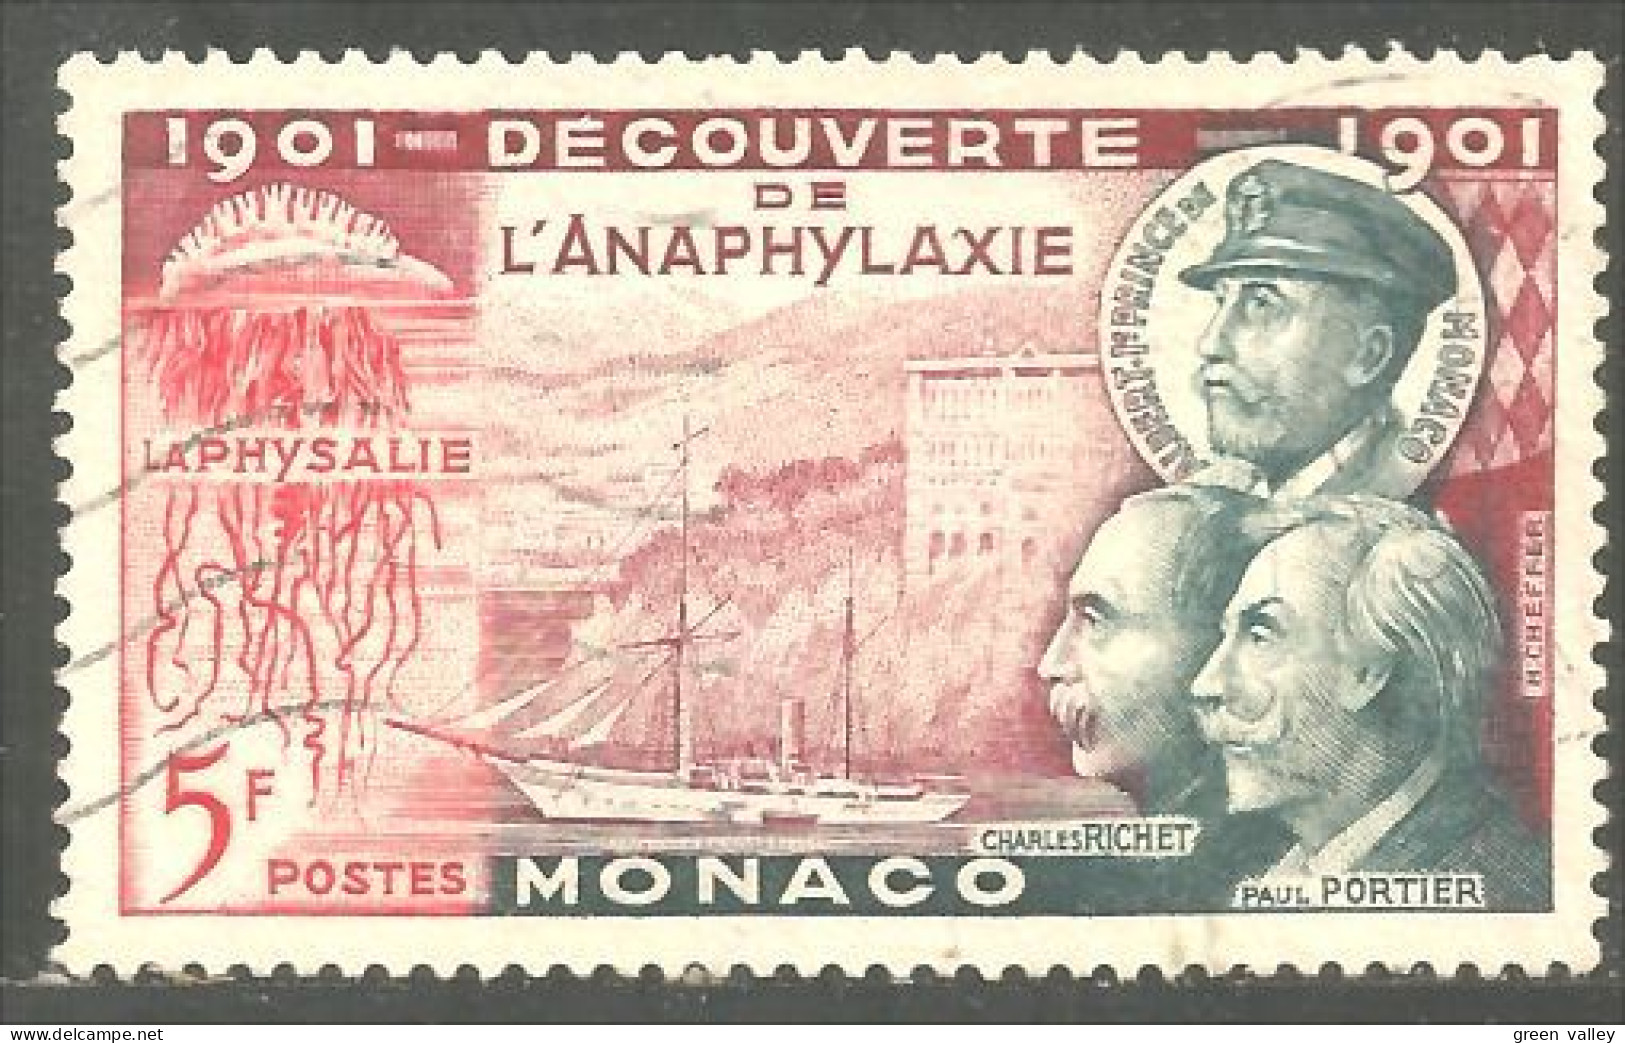 630 Monaco 1953 Yv 394 Découverte Anaphylaxie Phylasie Richer Portier (MON-285a) - Medicine